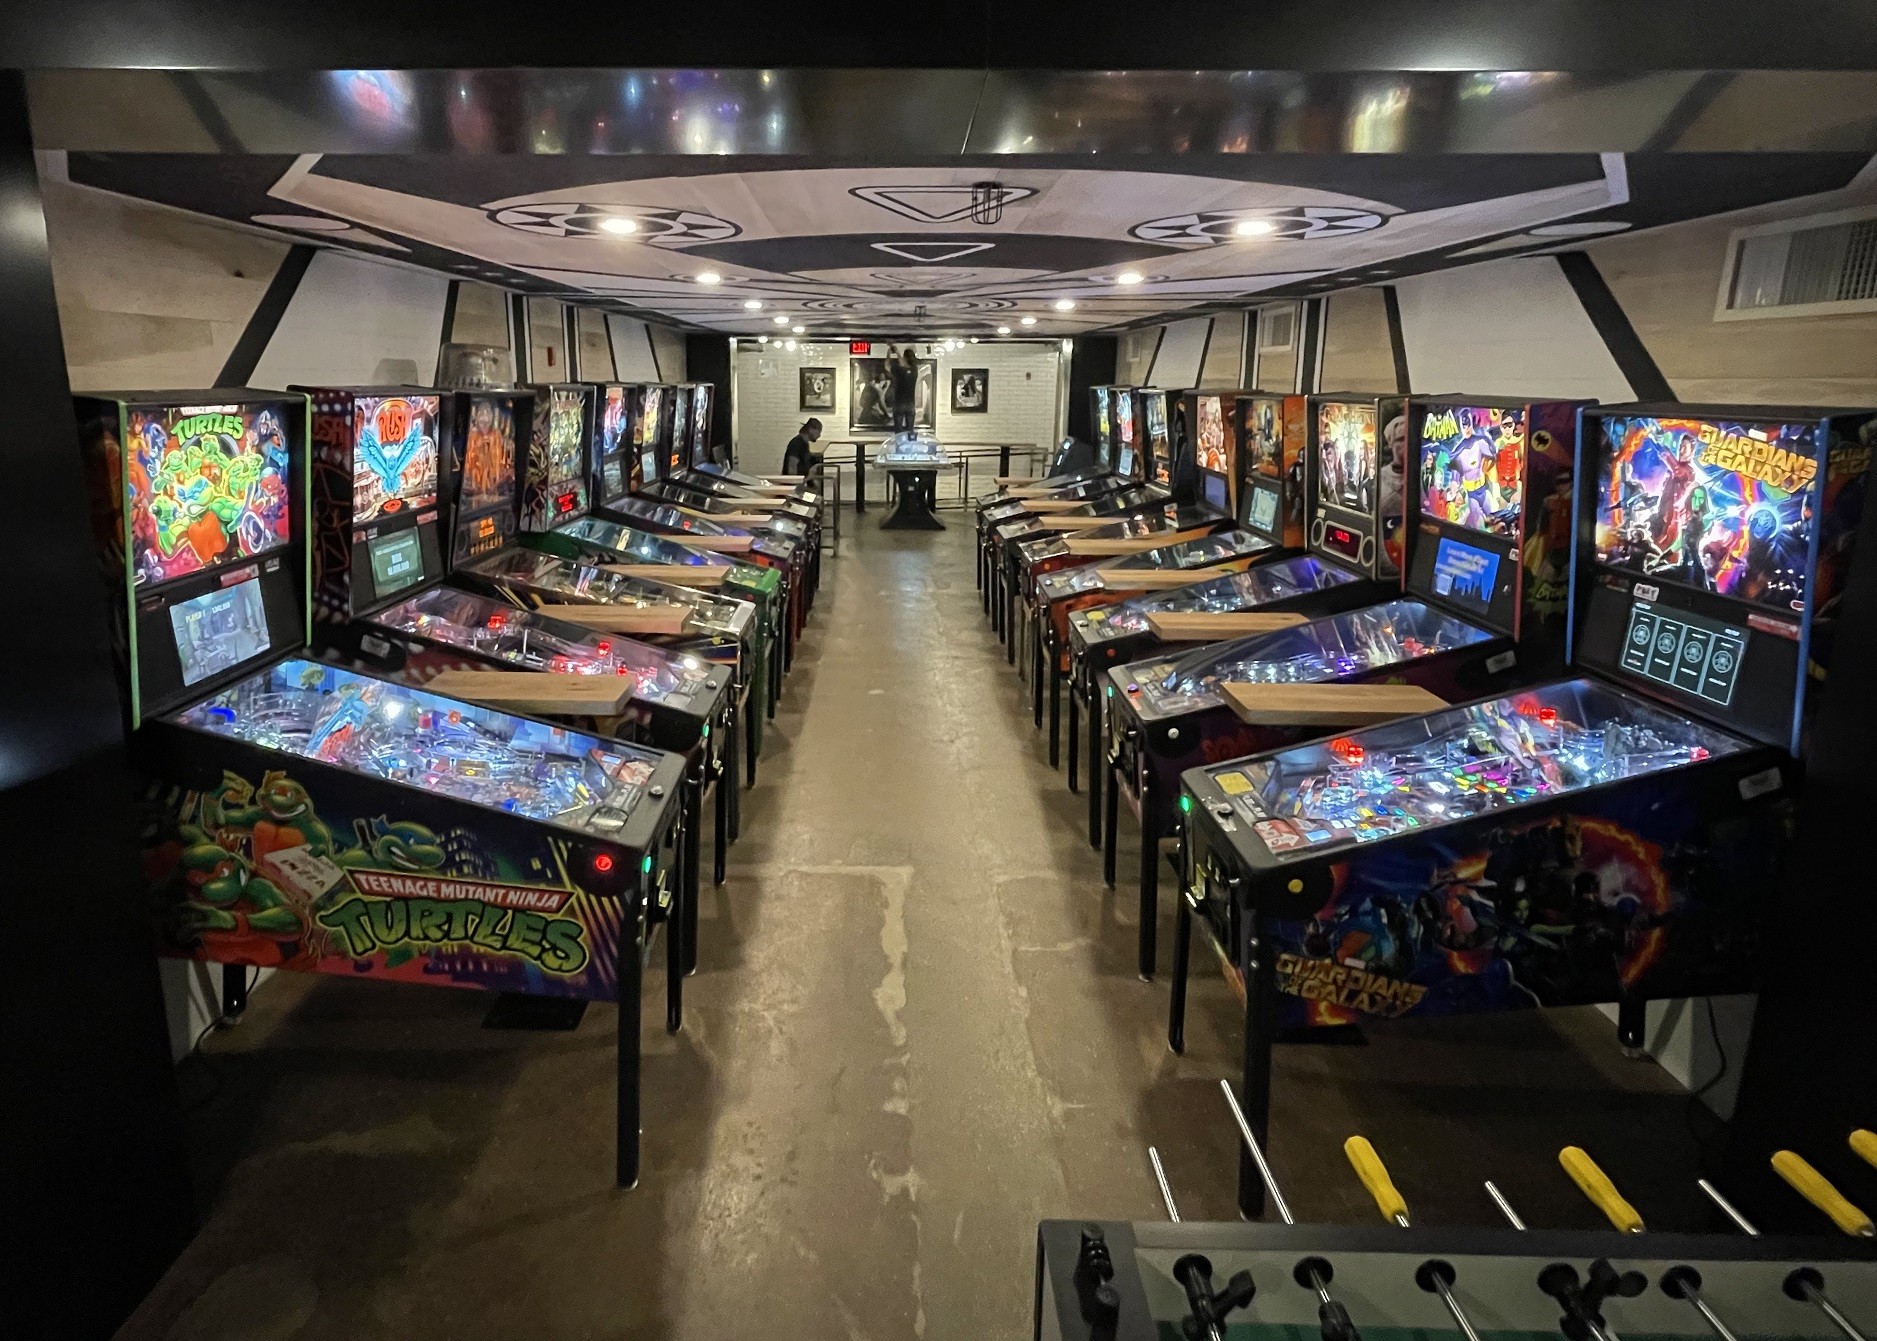 16-Bit Bar + Arcade, Pins Mechanical Co. now open in The Gulch